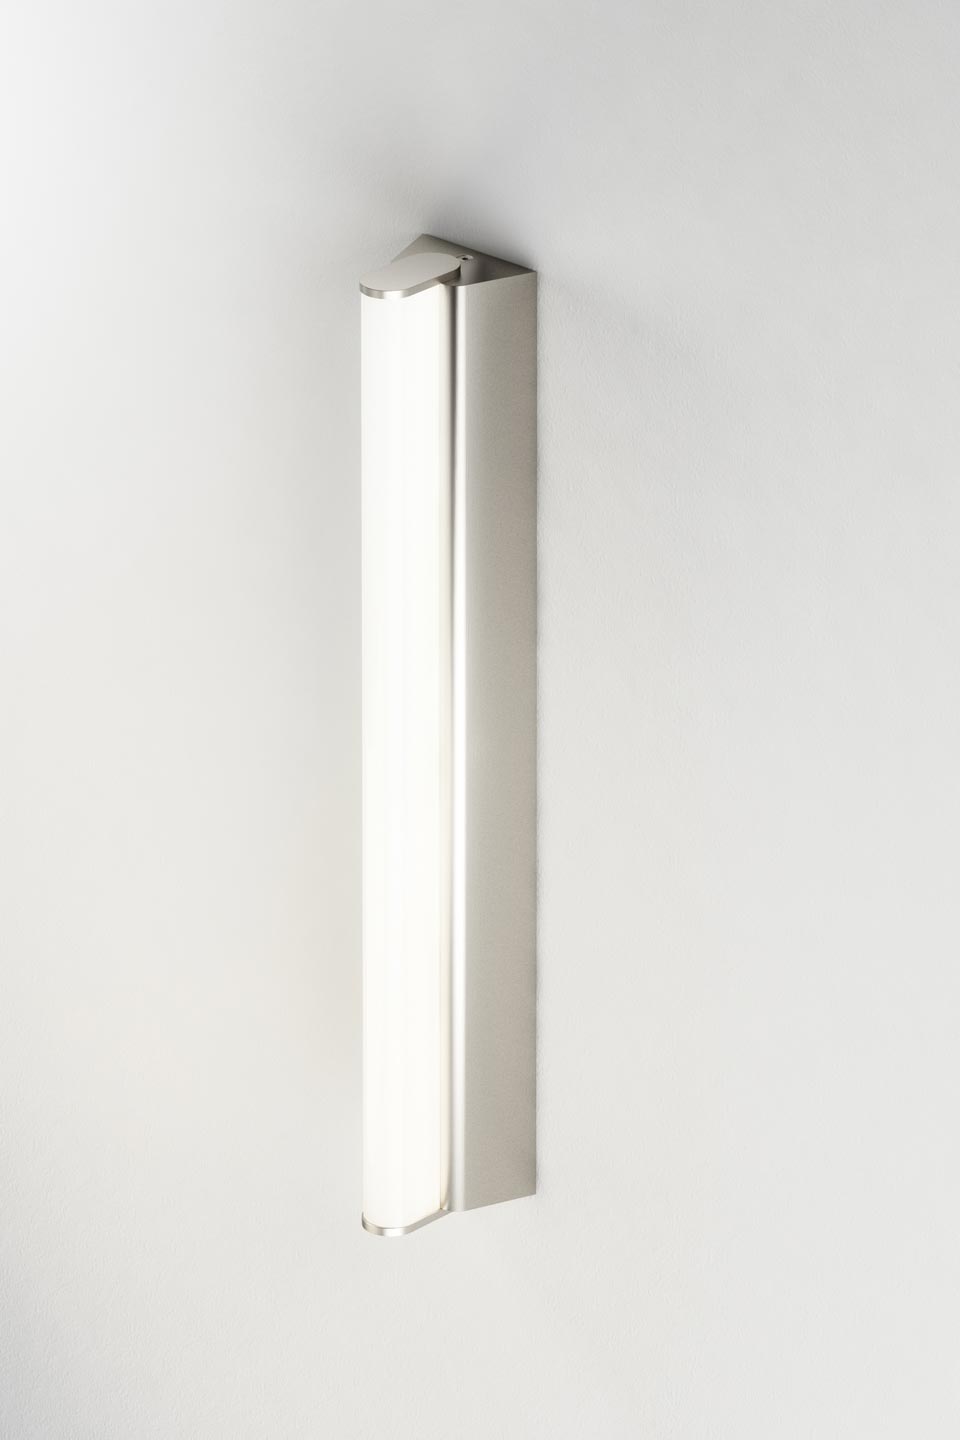 IP Metrop applique de salle de bain en nickel satiné 32,5 cm. CVL Luminaires. 